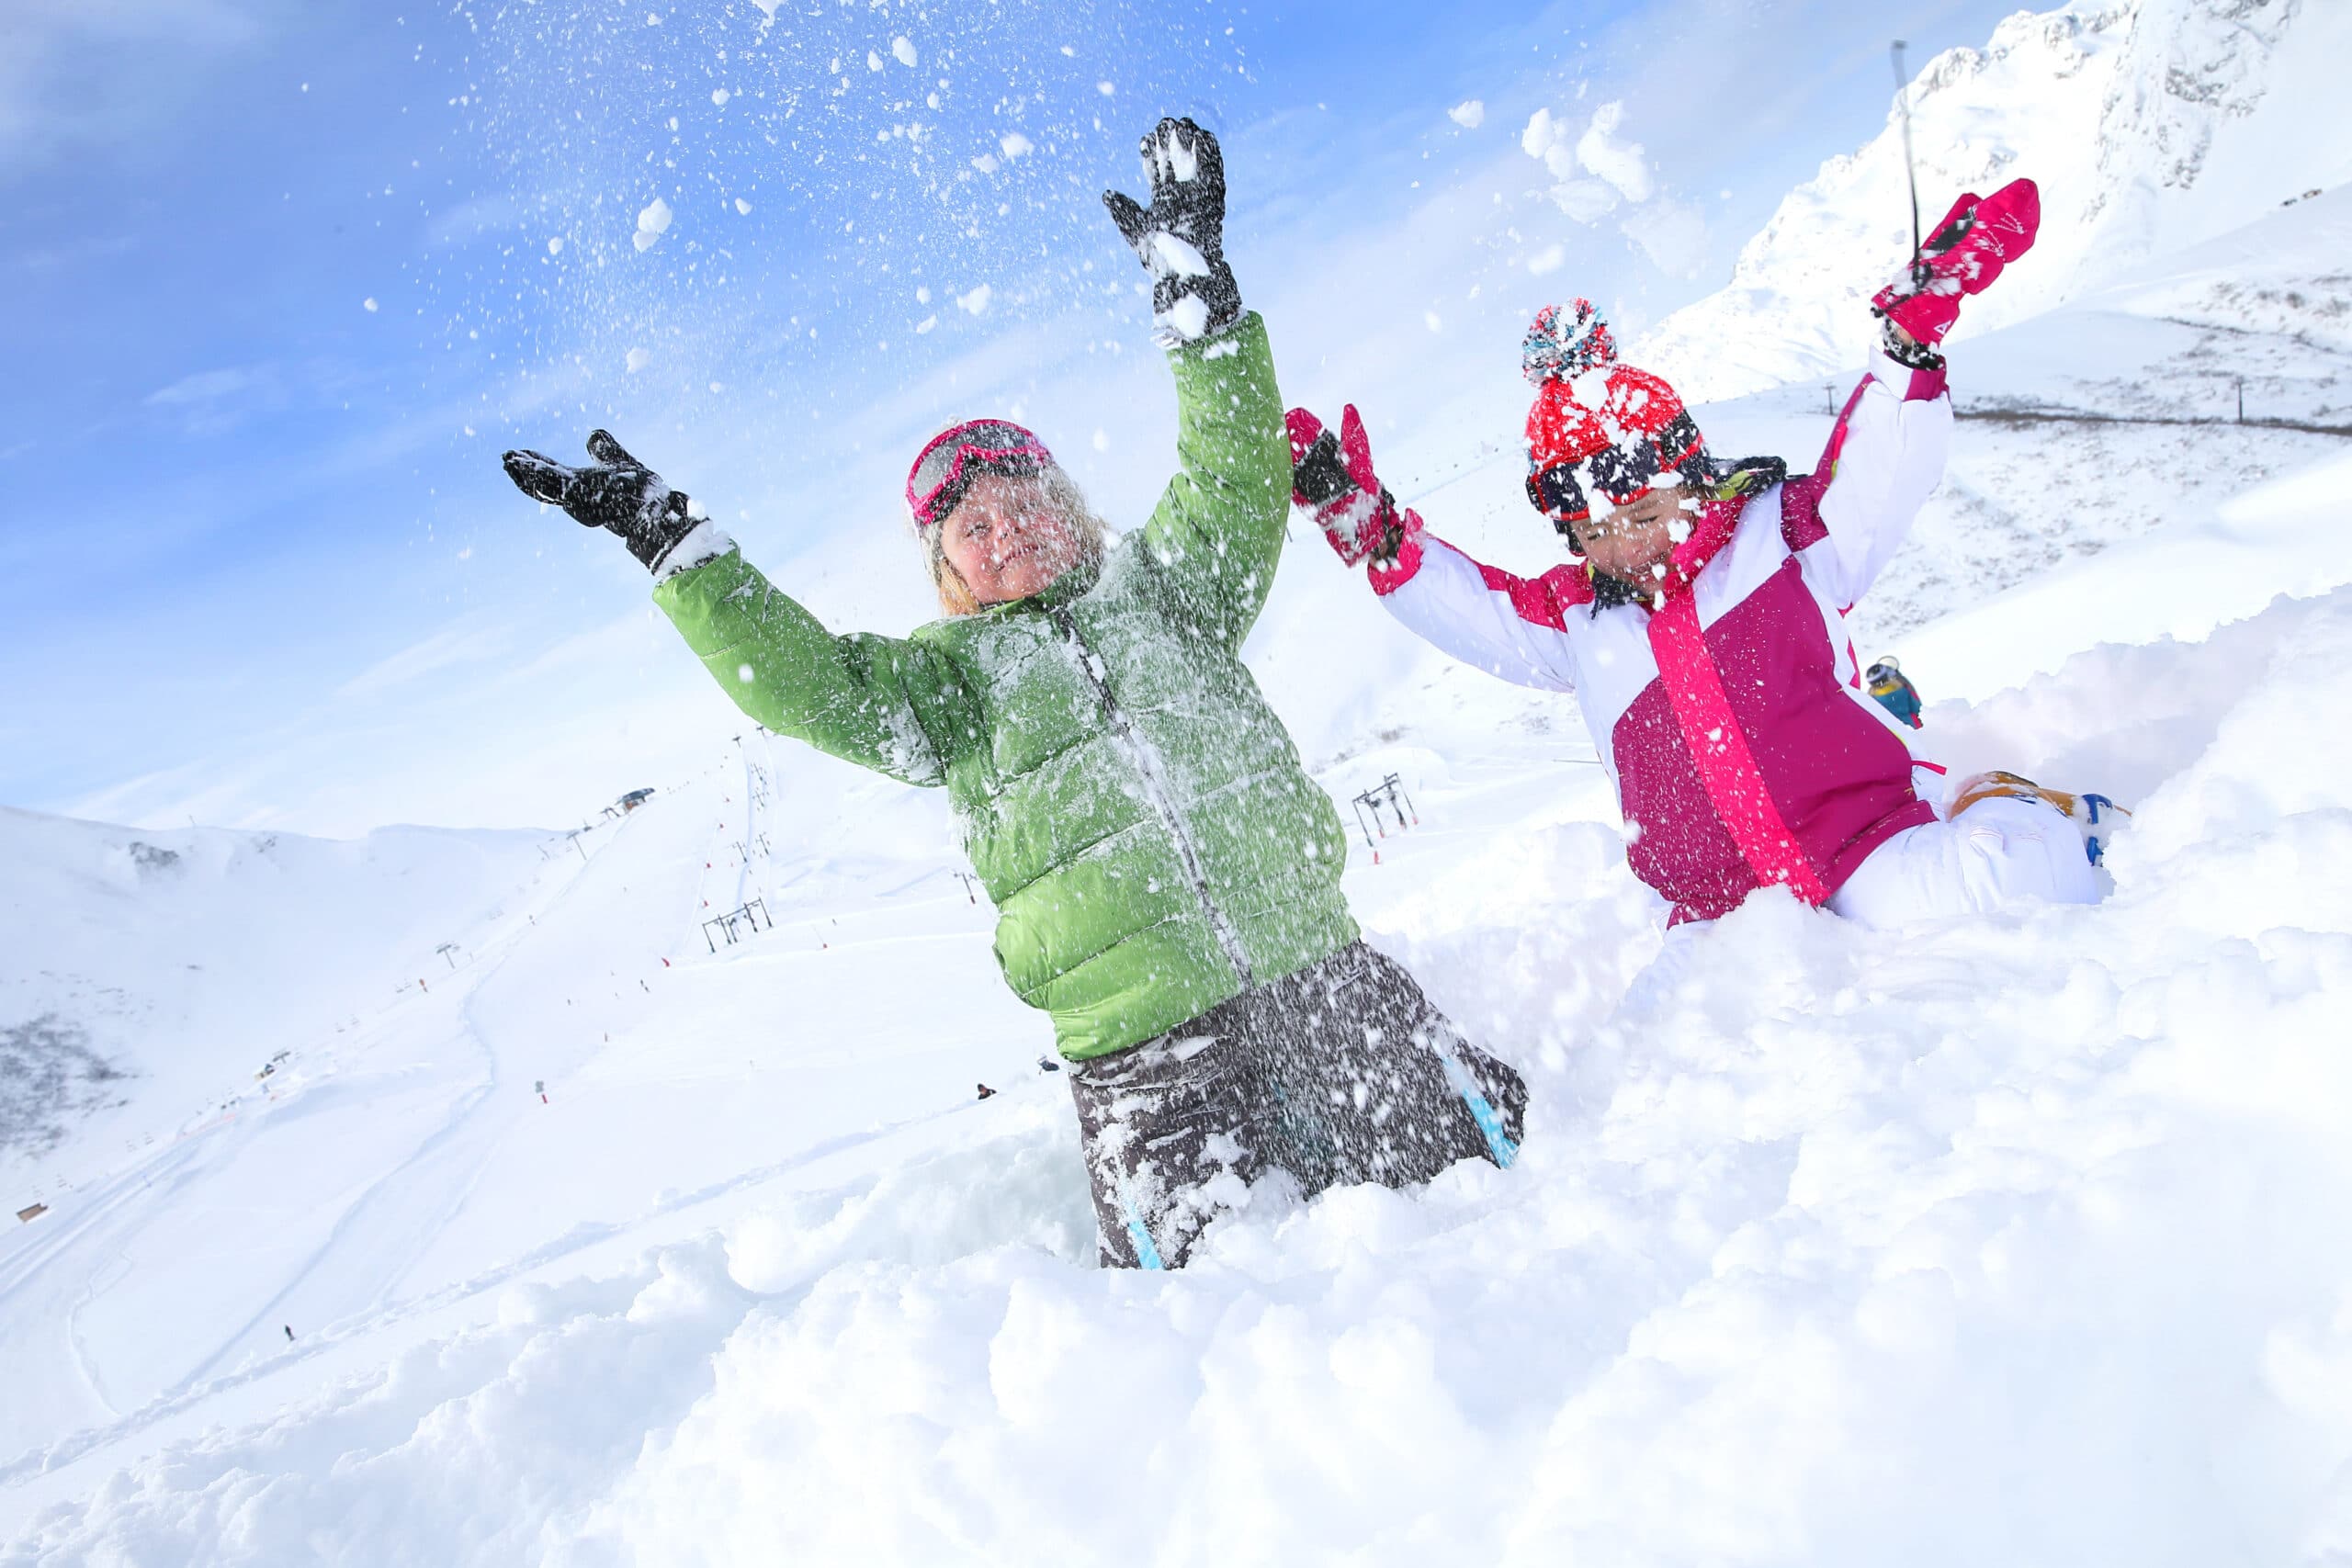 Children enjoy skiing